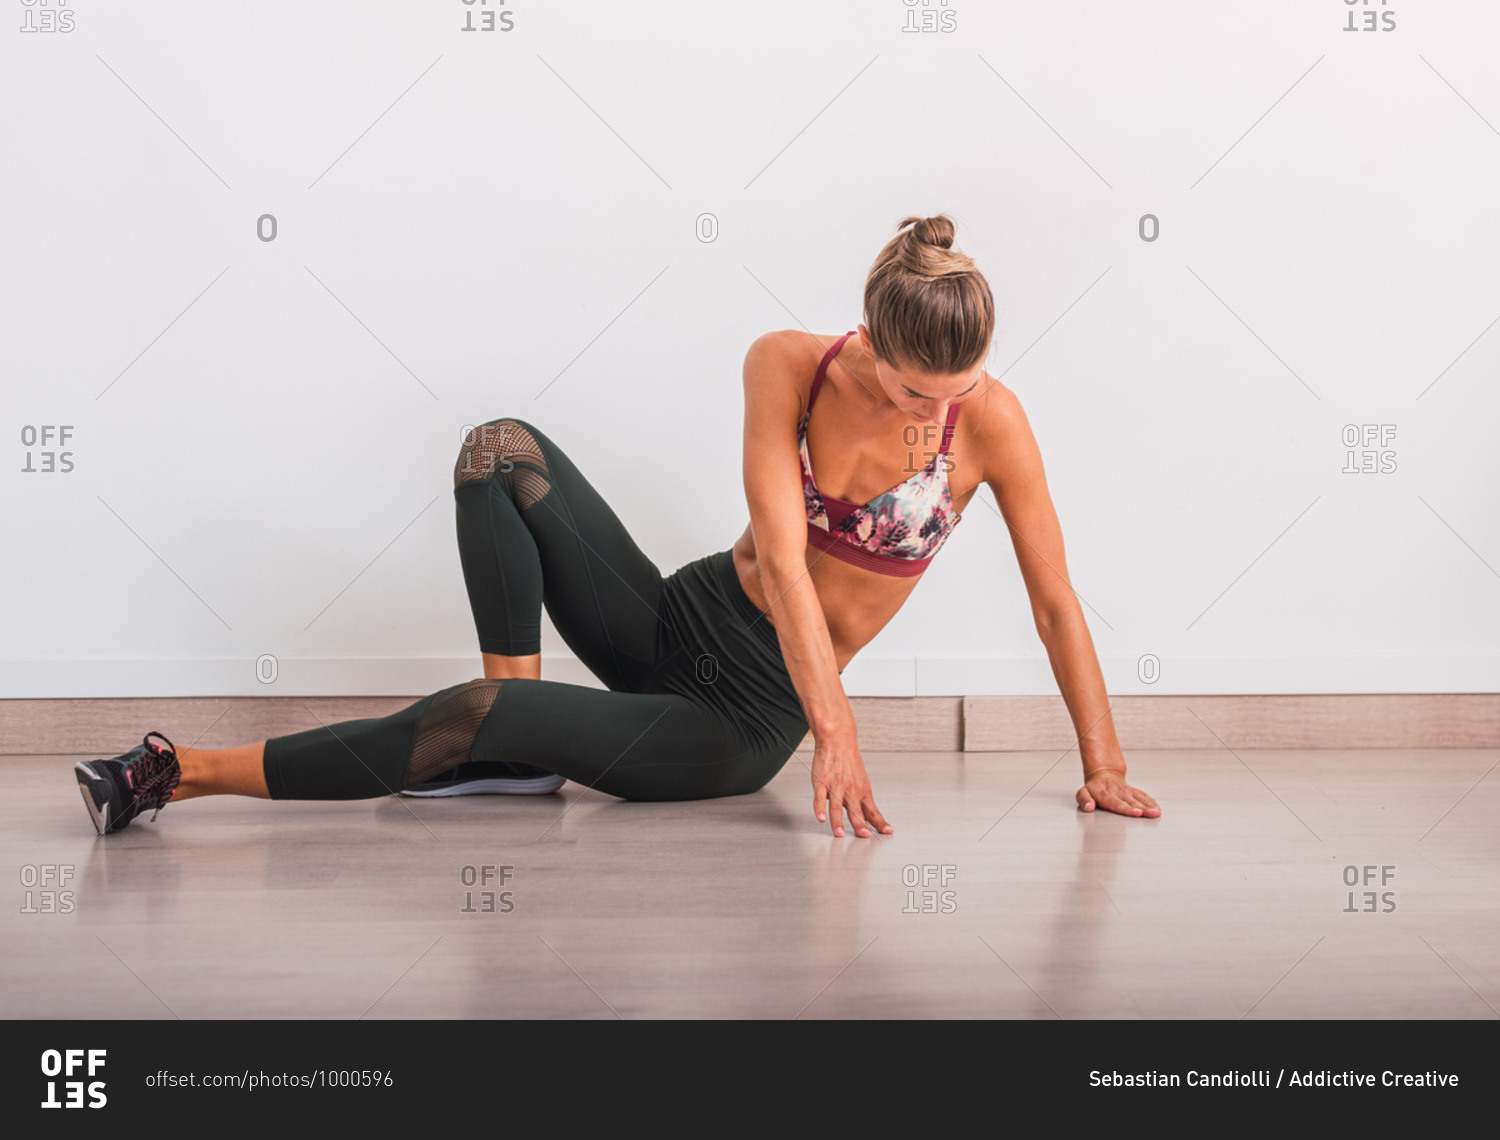 Slim woman doing pose on yoga mat stock photo - OFFSET